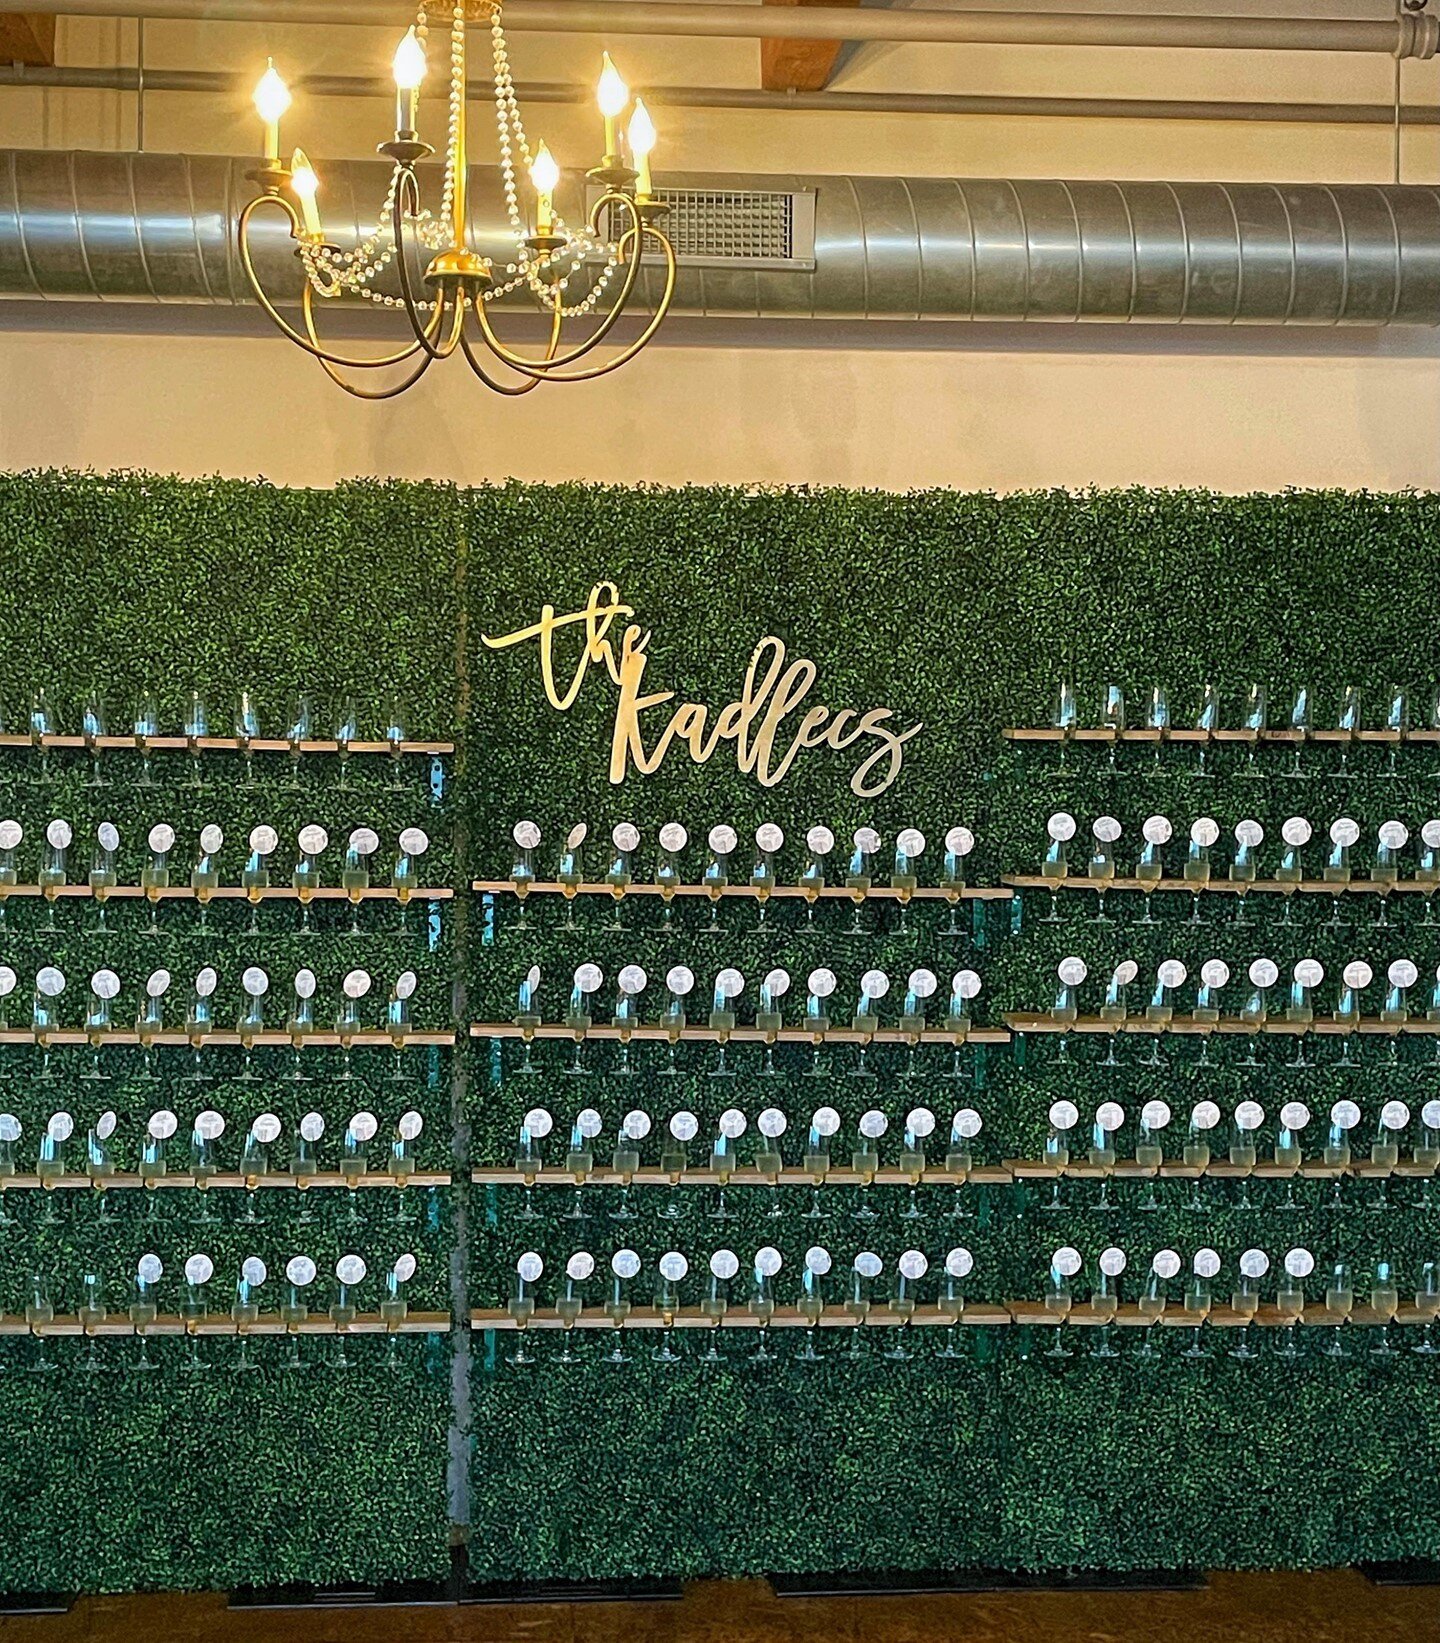 A champagne wall for escort cards? Always a yes! 🥂 
#cityviewloft #lmcaters #champagnewall #loftwedding #cheers 
.
.
.
.
#eventdecor #eventdesign #realwedding #wedding #happilyeverafter #weddinginspo #weddinginspiration #chicagowedding #mychicagopix